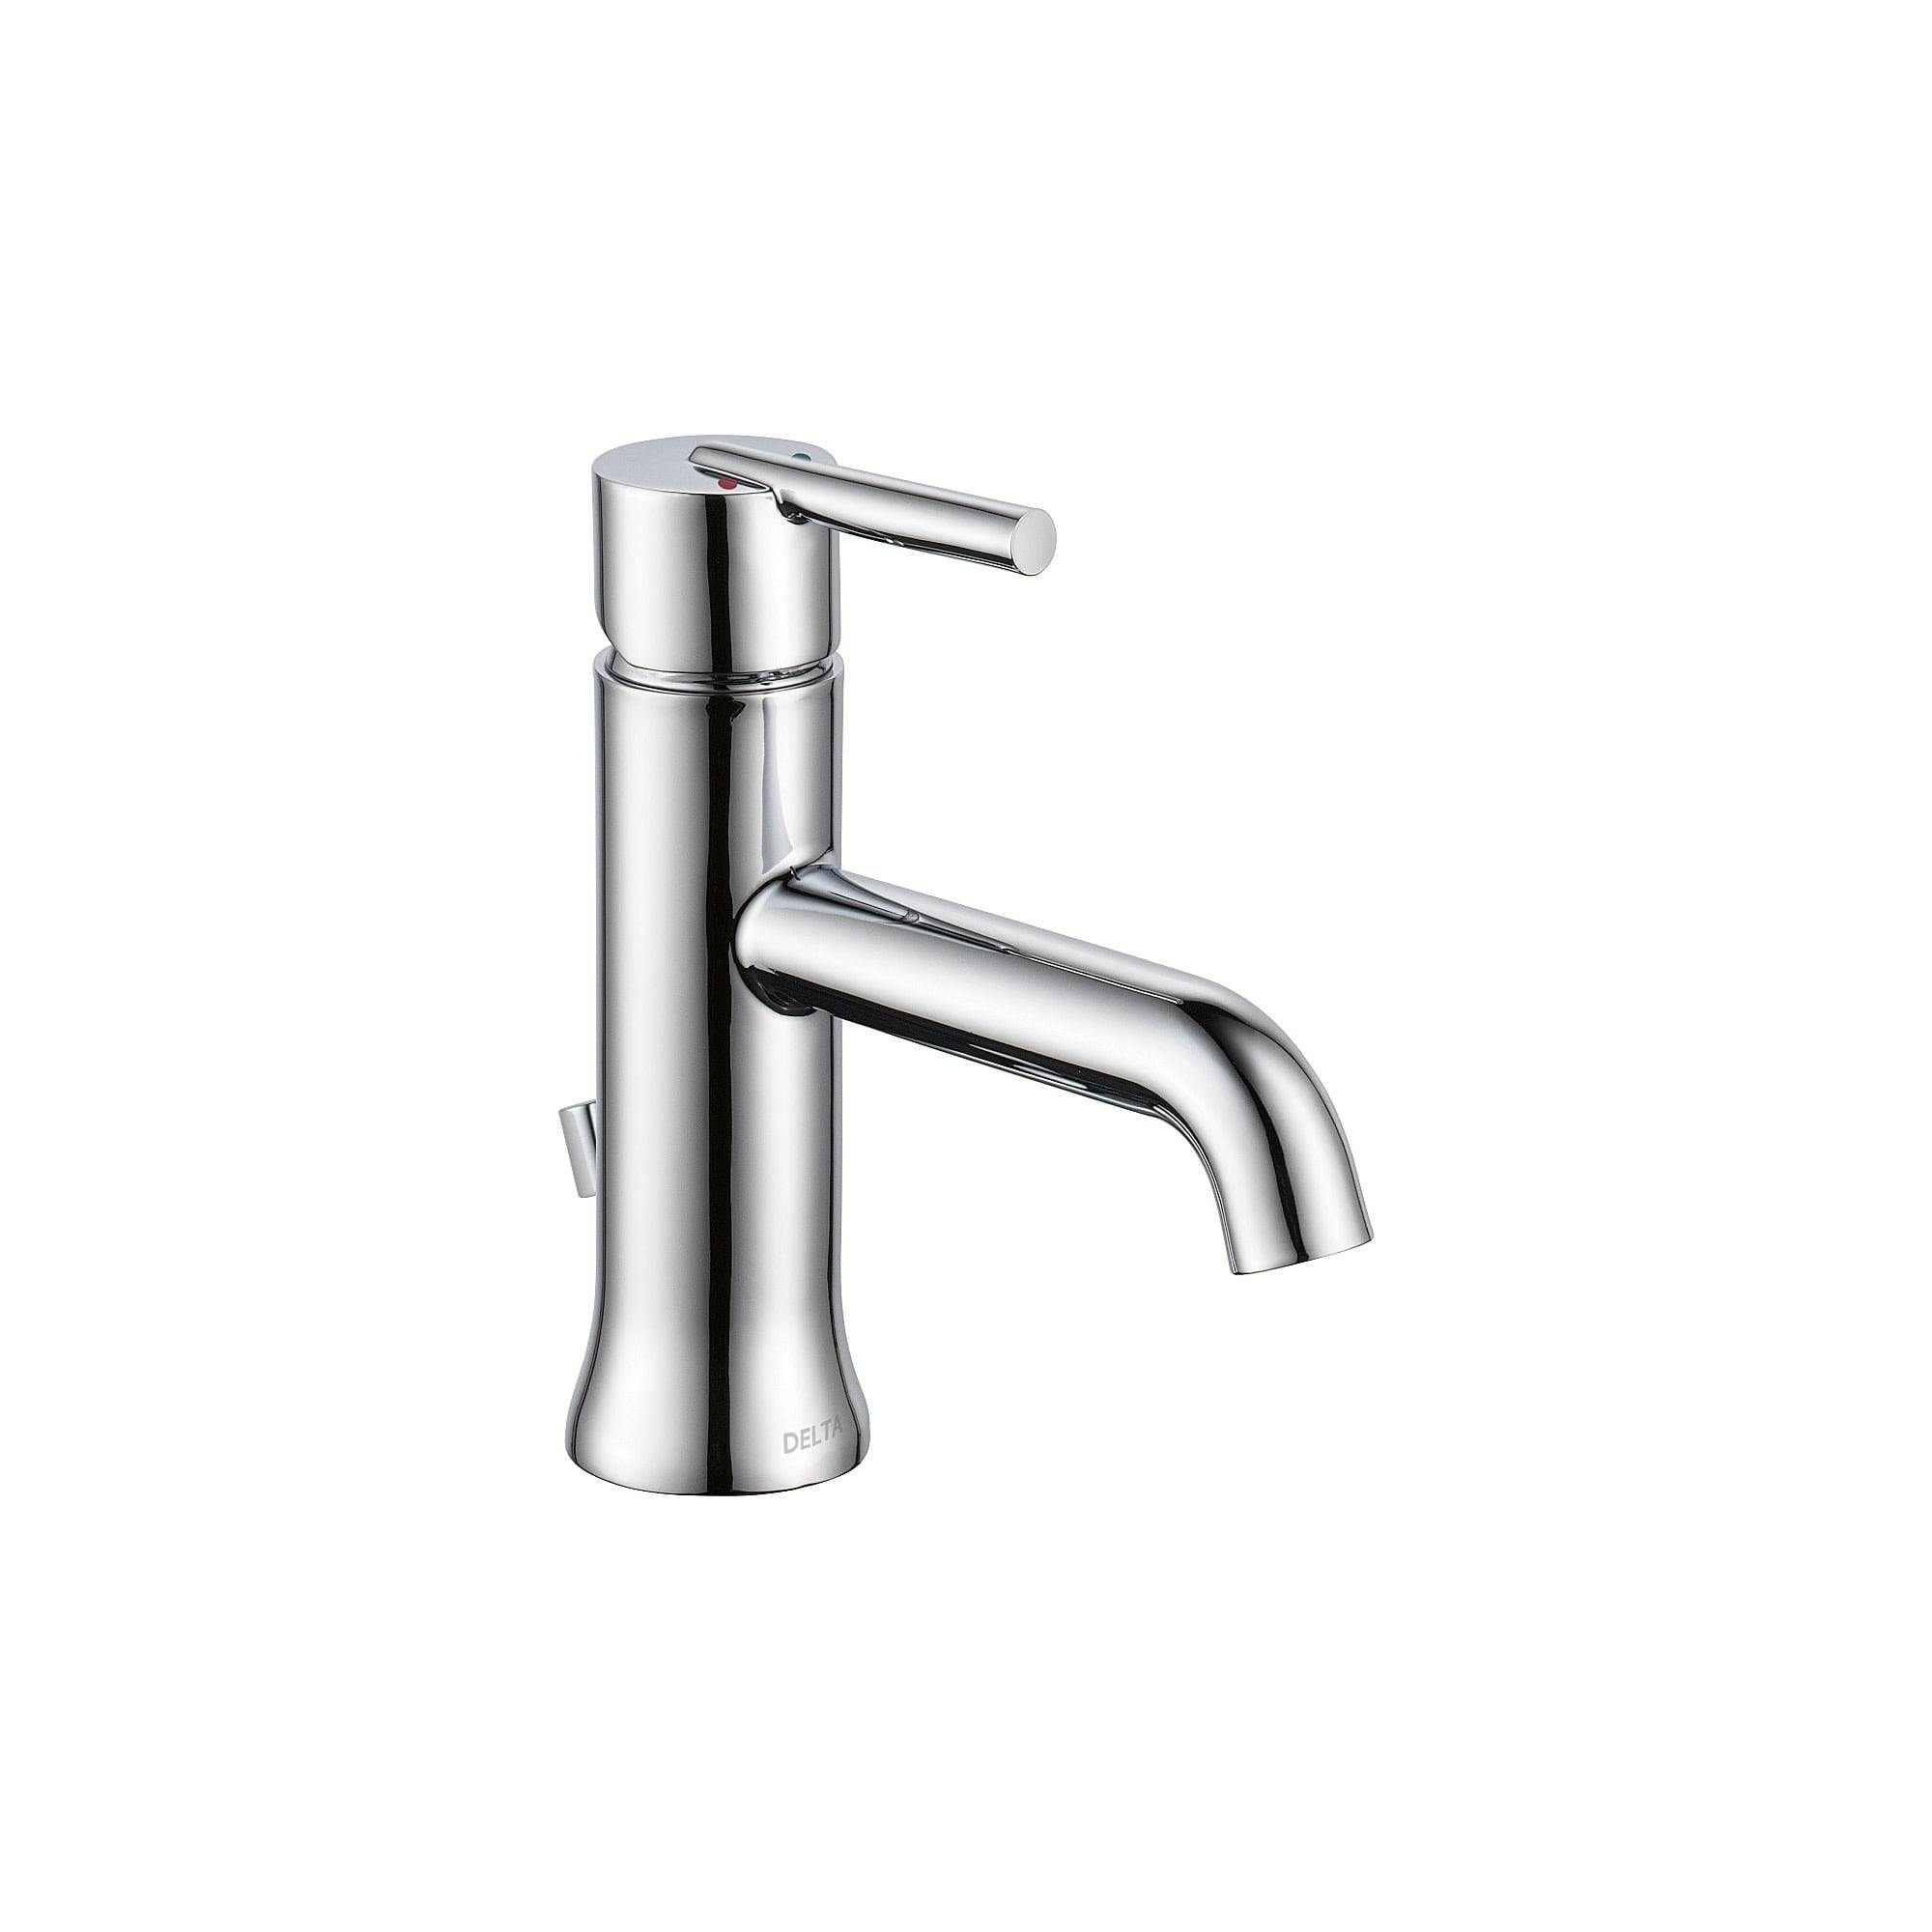 Trinsic Chrome Single Handle Bathroom Faucet with Pop-Up Drain